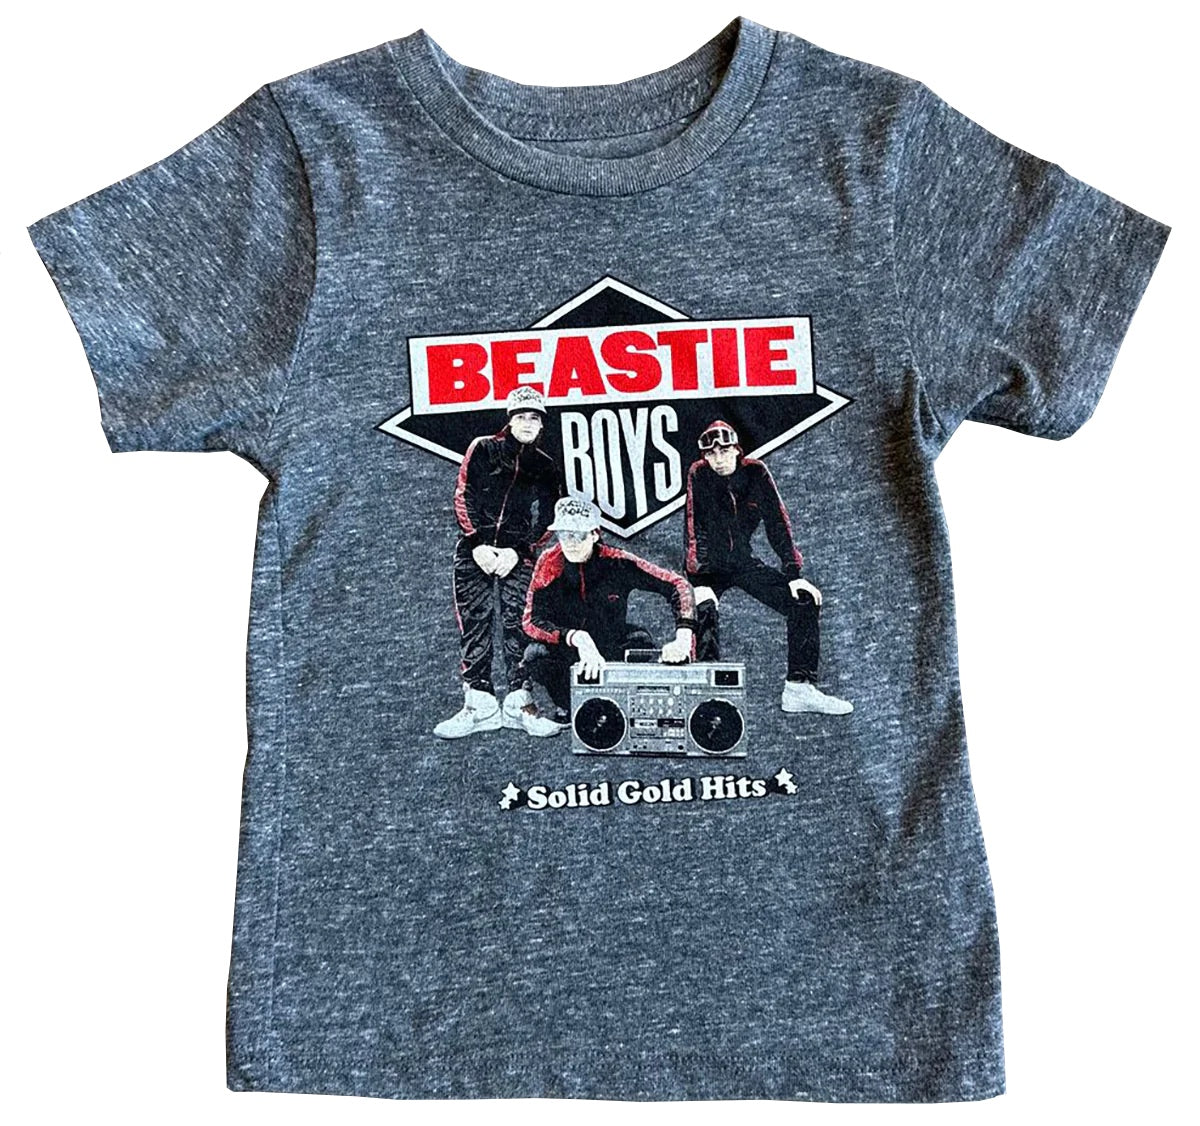 Beastie Boys short sleeve tee